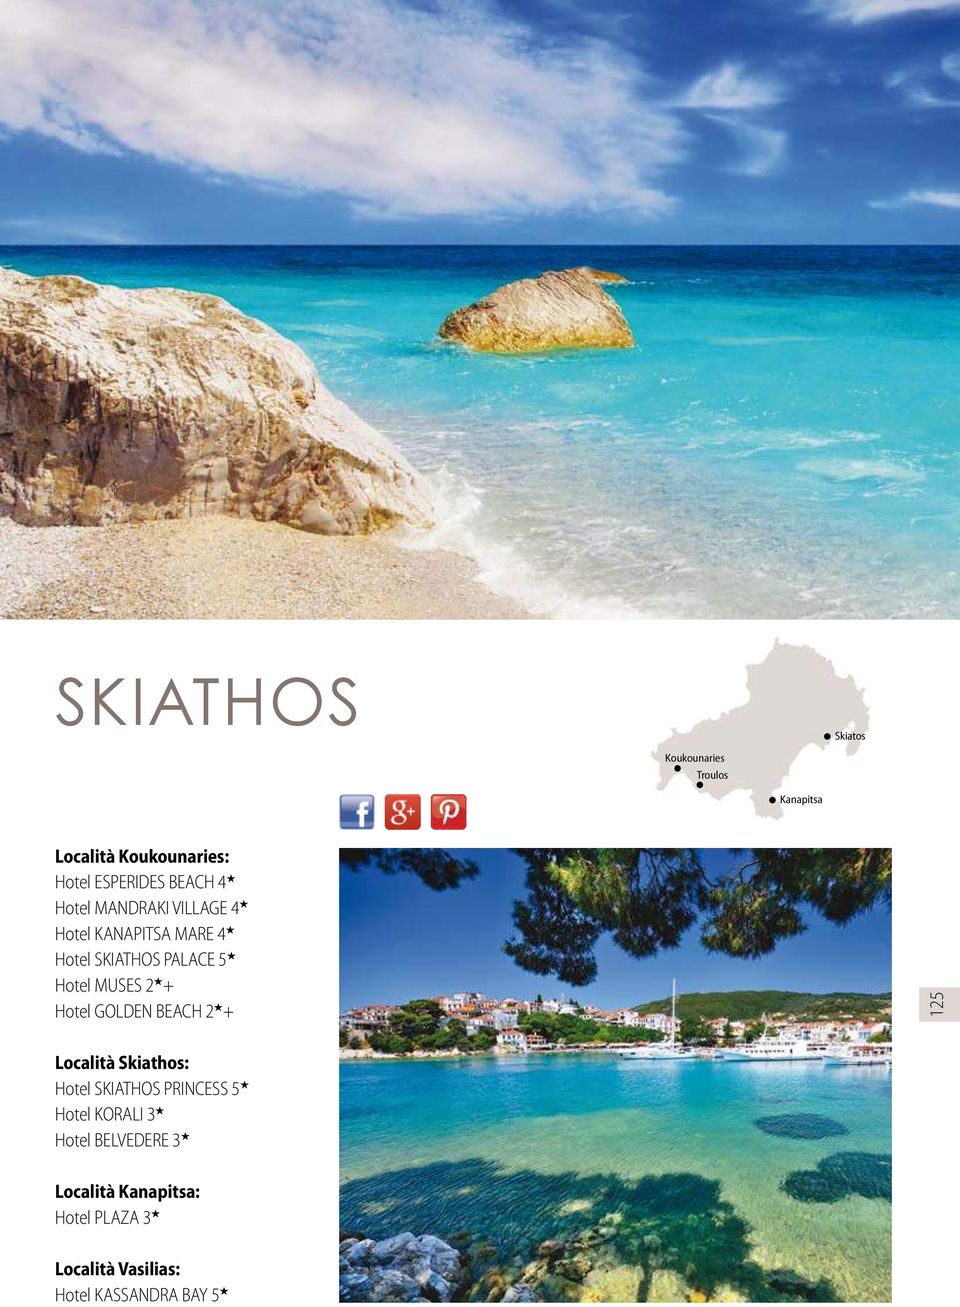 GOLDEN BEACH 2 + Località Skiathos: Hotel SKIATHOS PRINCESS 5 Hotel KORALI 3 Hotel BELVEDERE 3